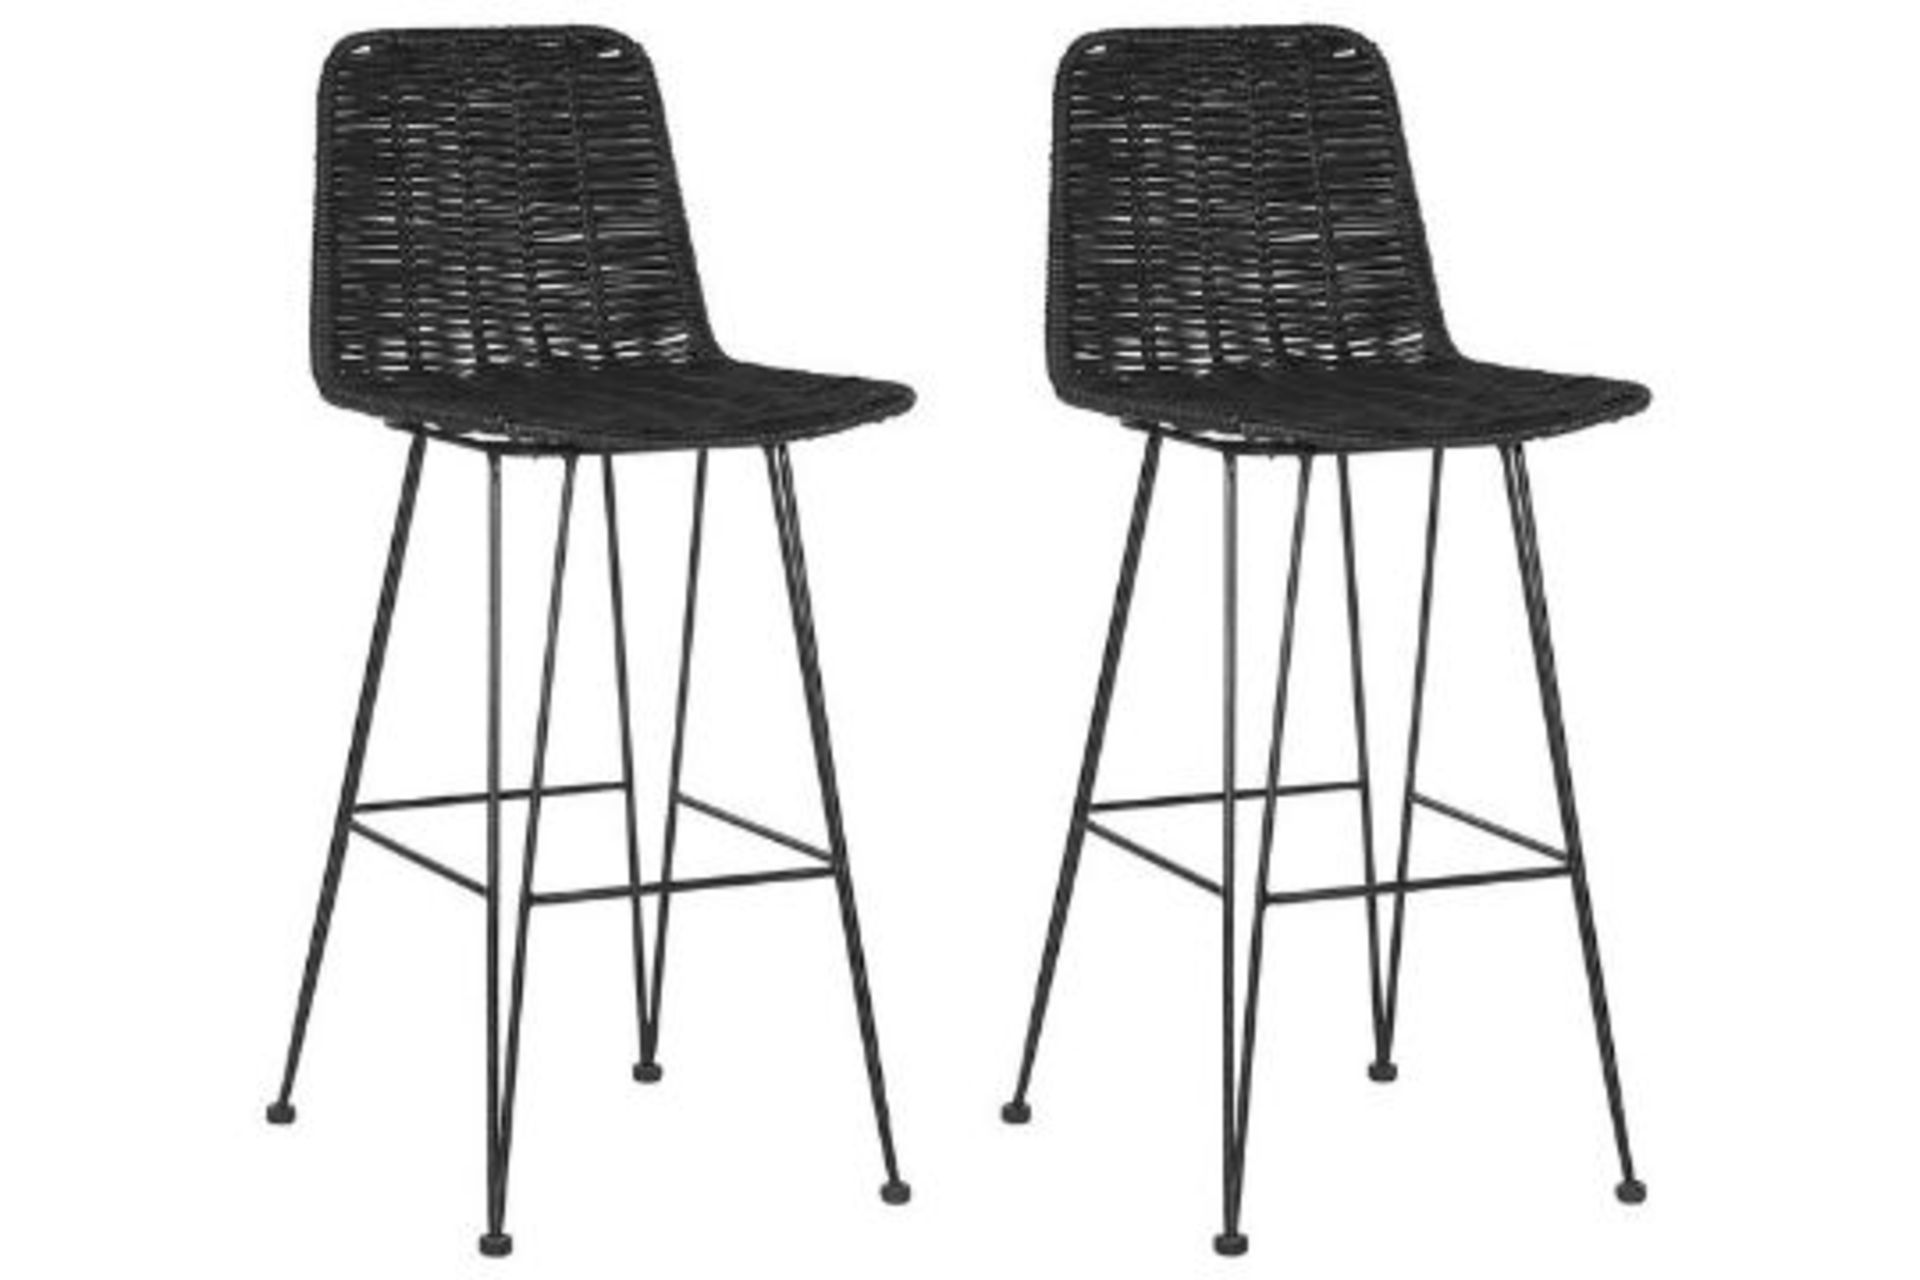 Cassita Set of 2 Rattan Bar Chairs Black. - ER23. RRP £199.99